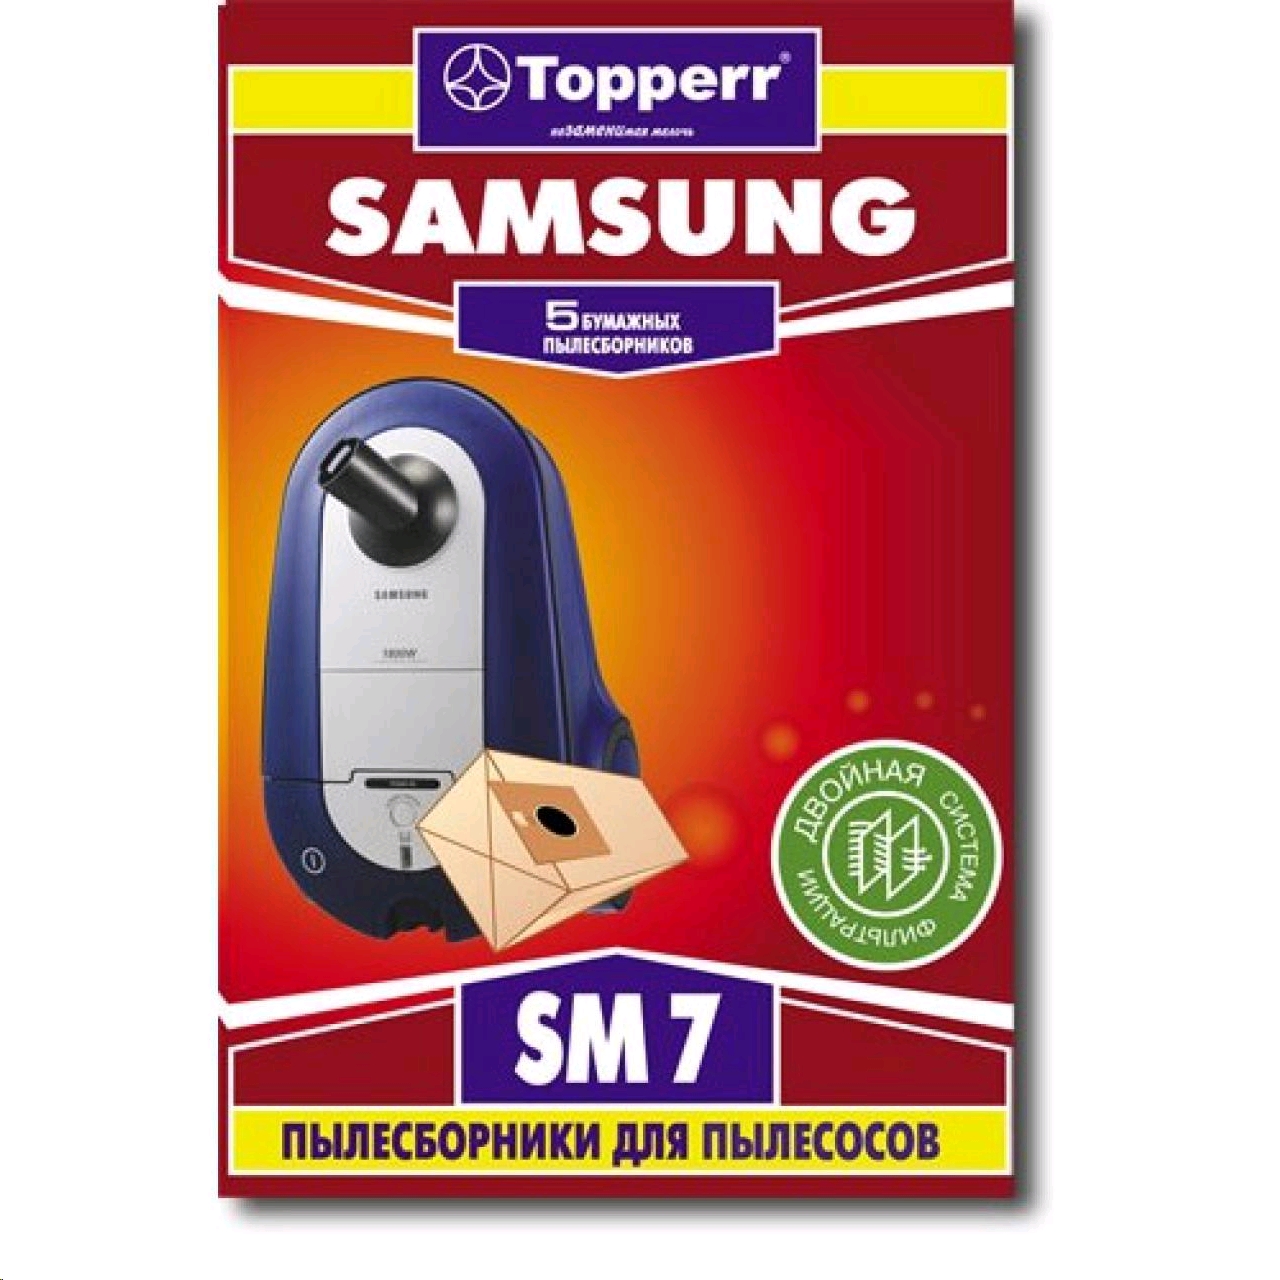 Topperr 1031 SM 7 пылесборники